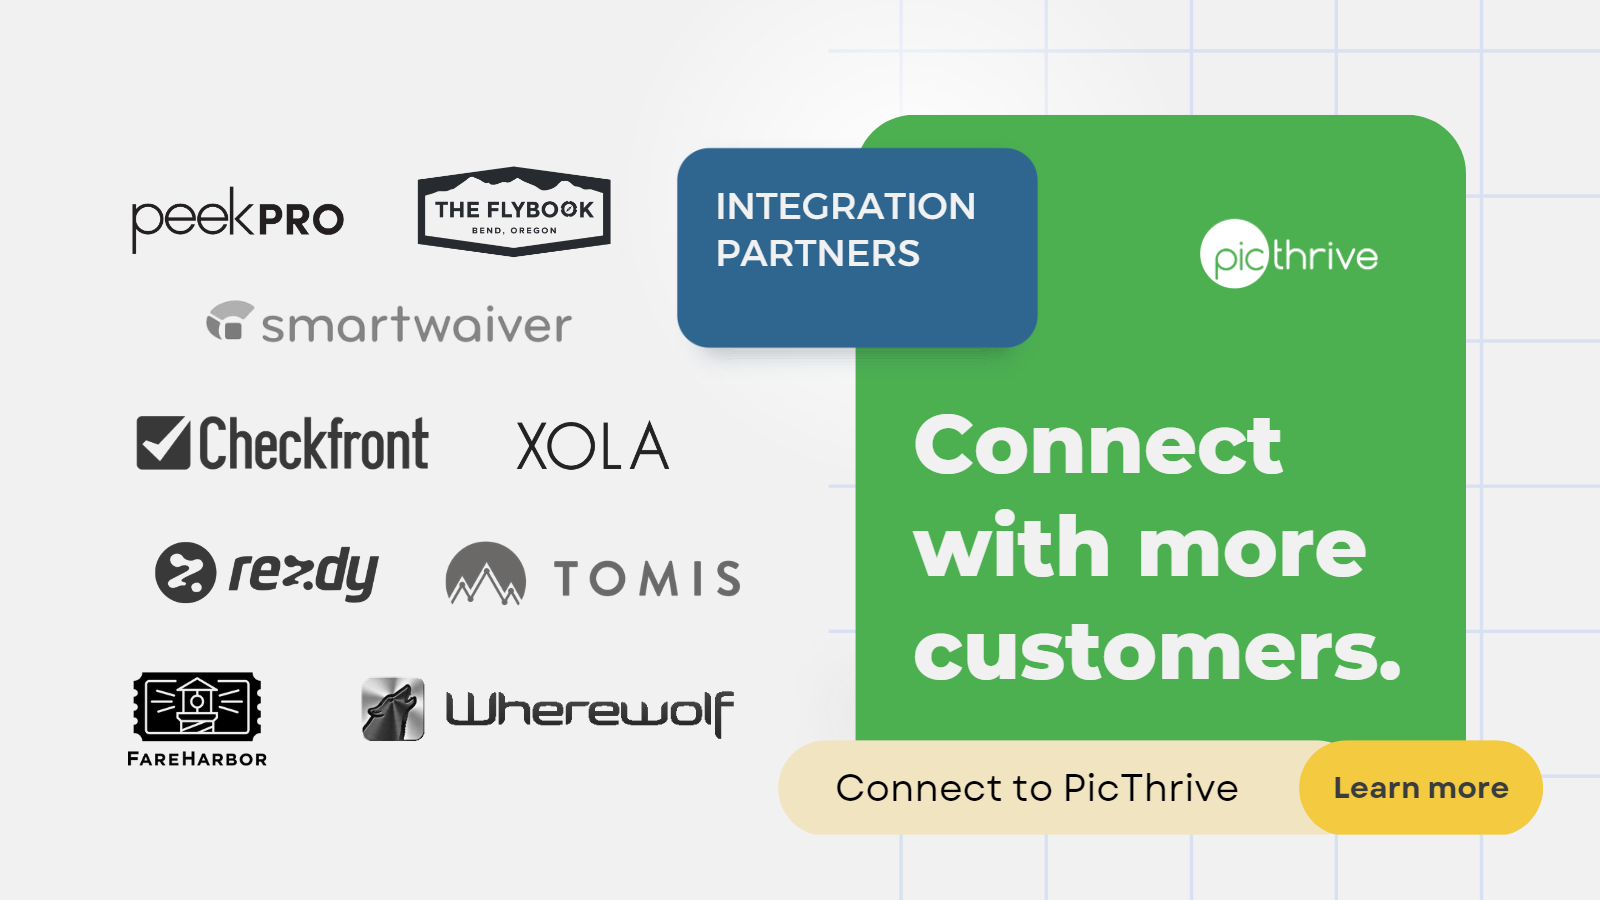 PicThrive integration partners